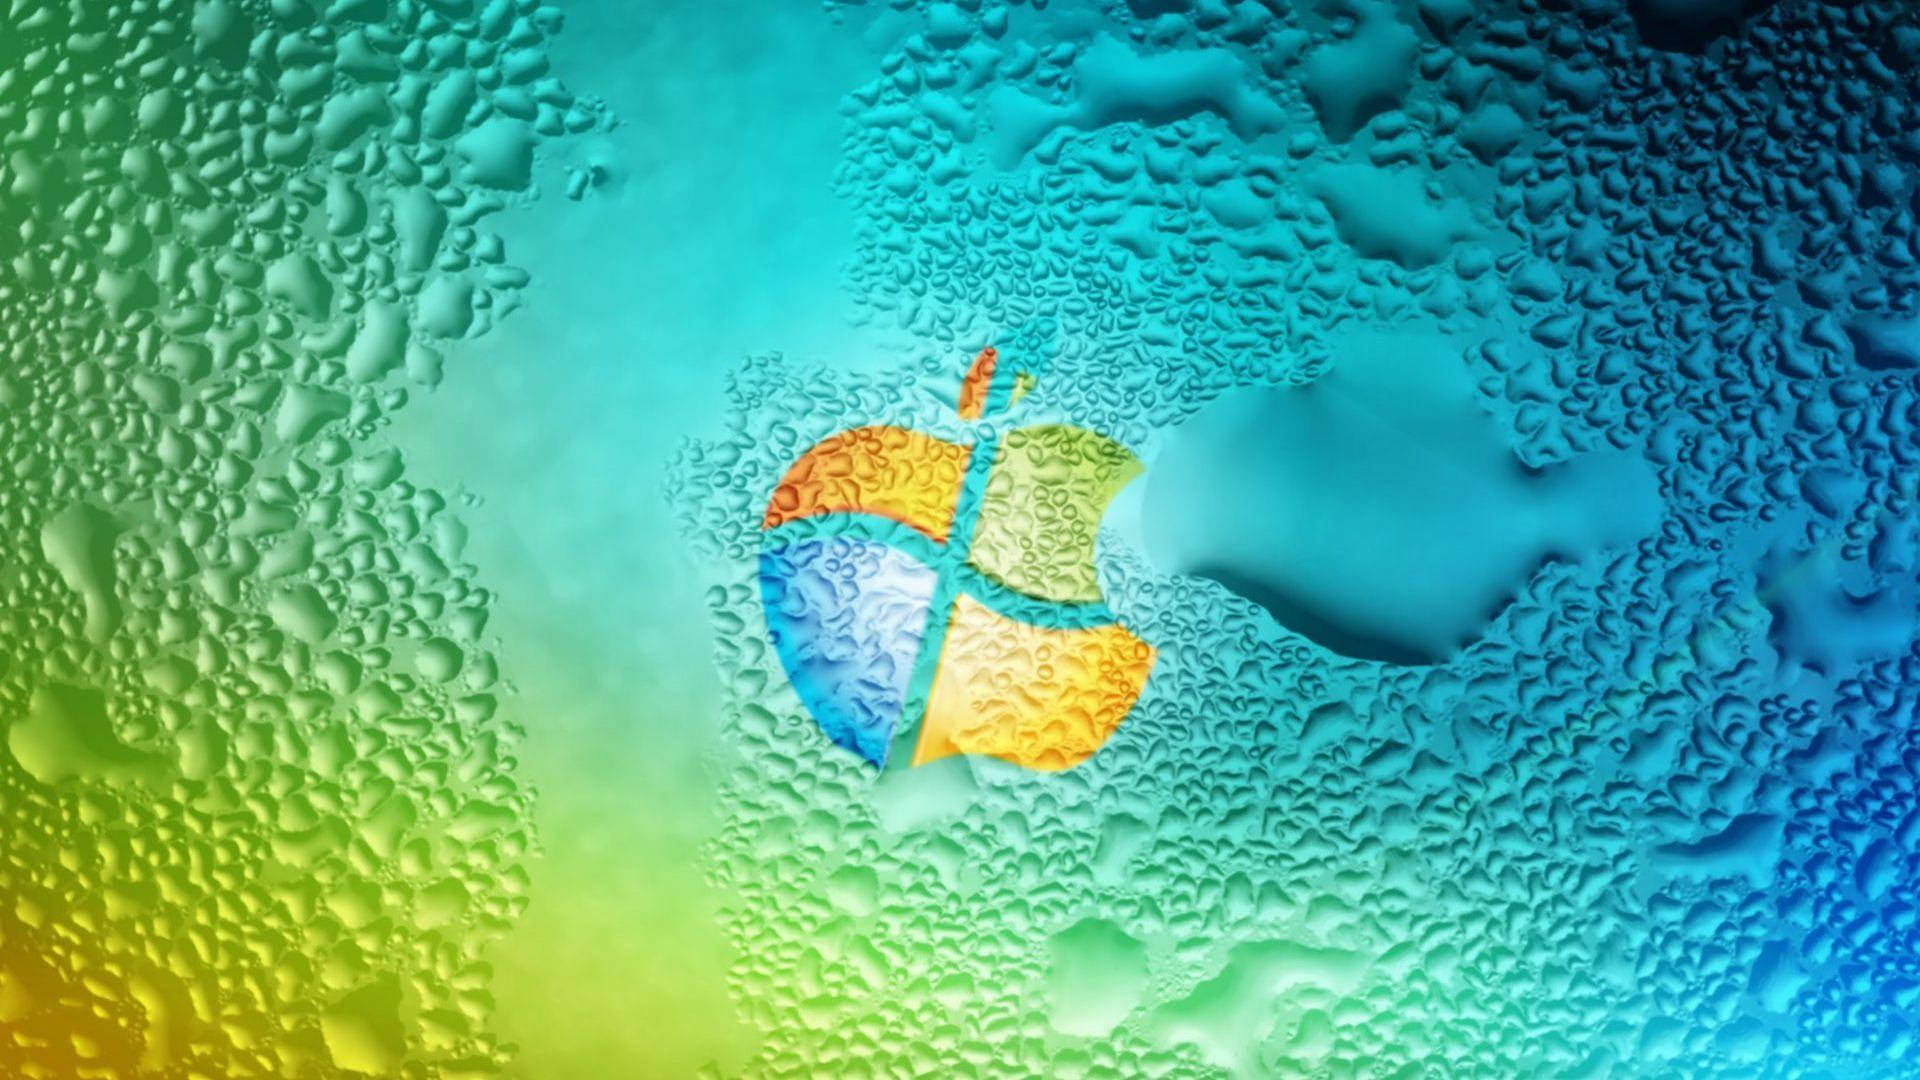 Enjoy vibrant colors with Apple HD Desktop Wallpaper